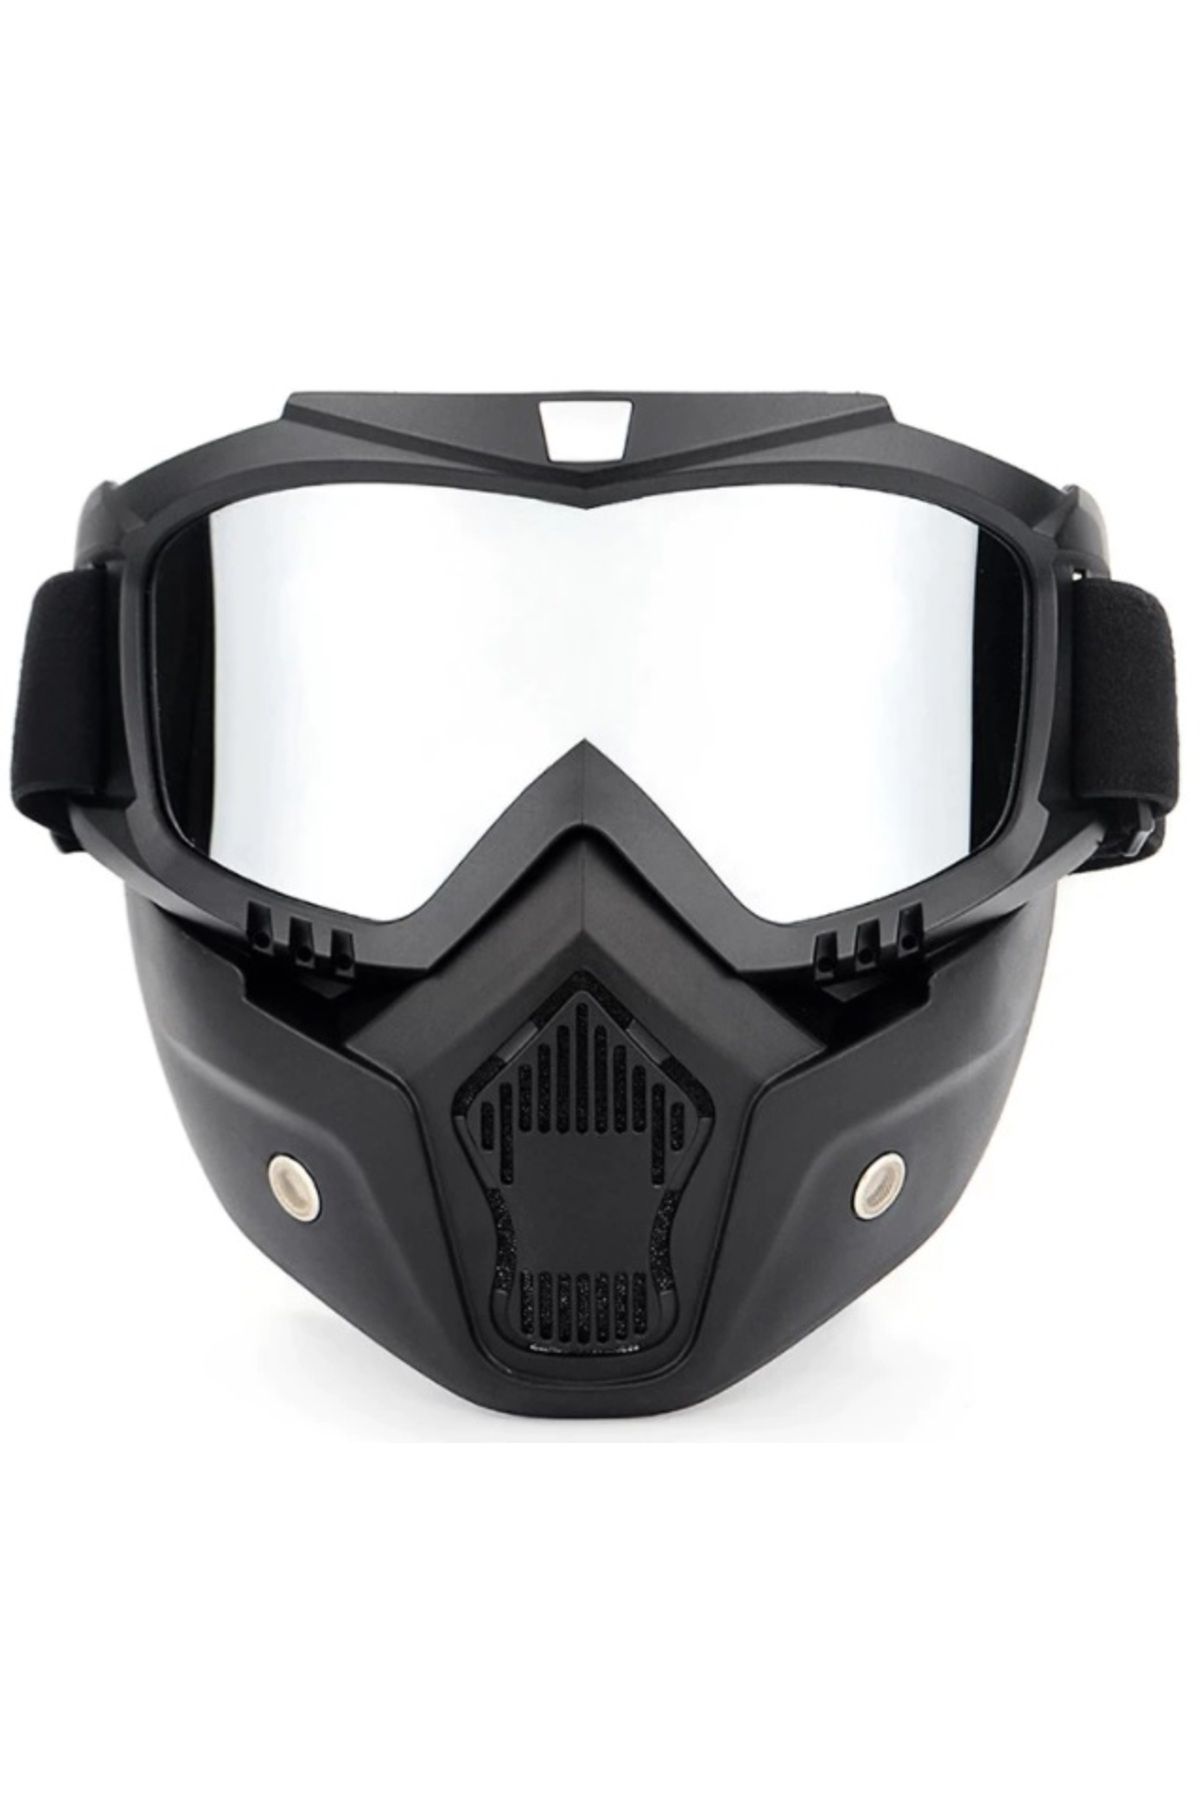 AnkaShop Cross Motosiklet Bisiklet Gözlüğü Açık Kask Maskesi Süngerli Bant Lastikli Jet Maske Aynalı Cam